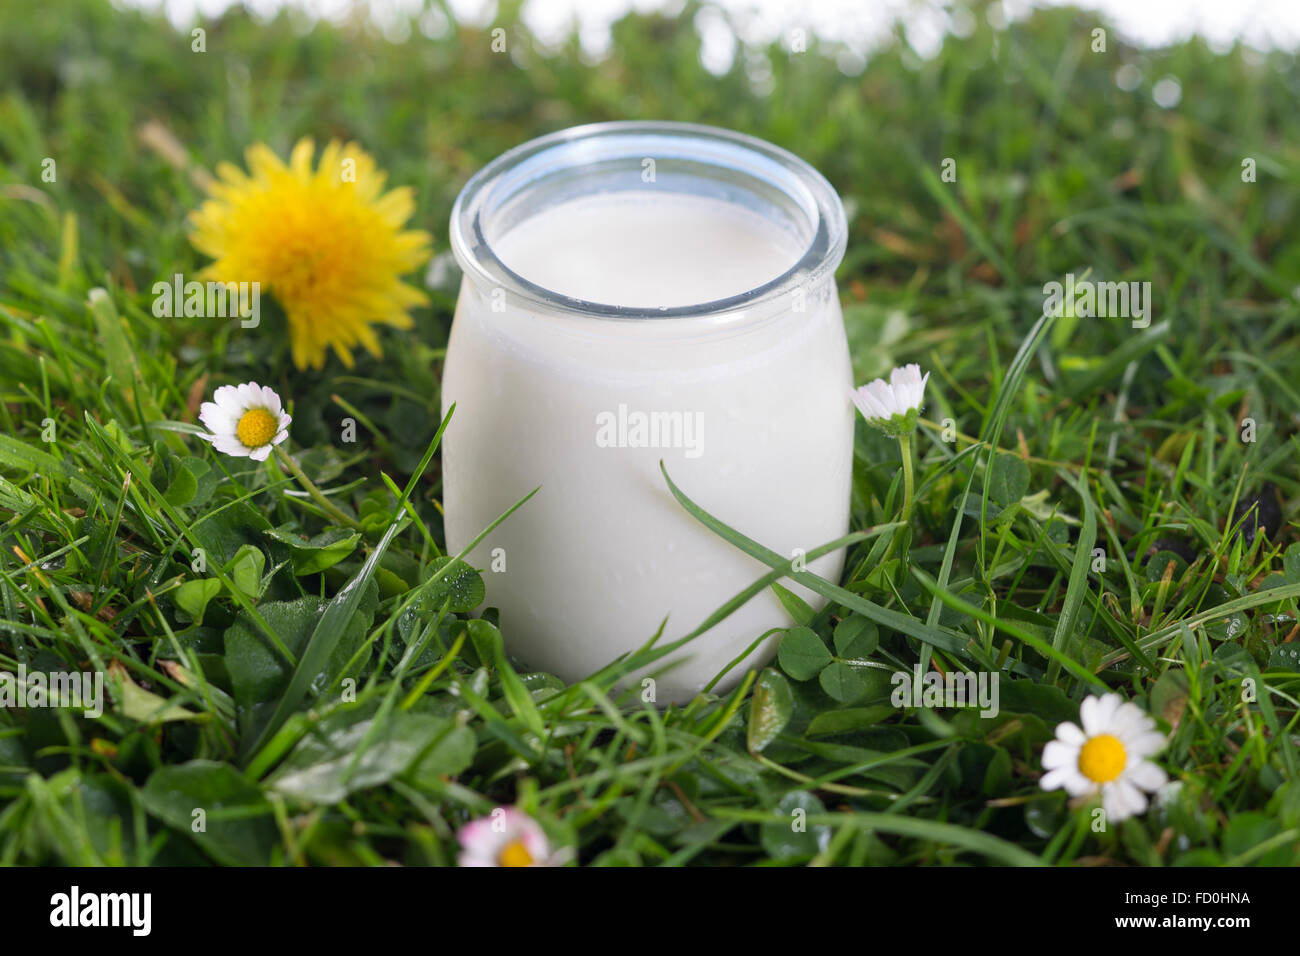 Yogurt jar on the grass with cflowers Stock Photo